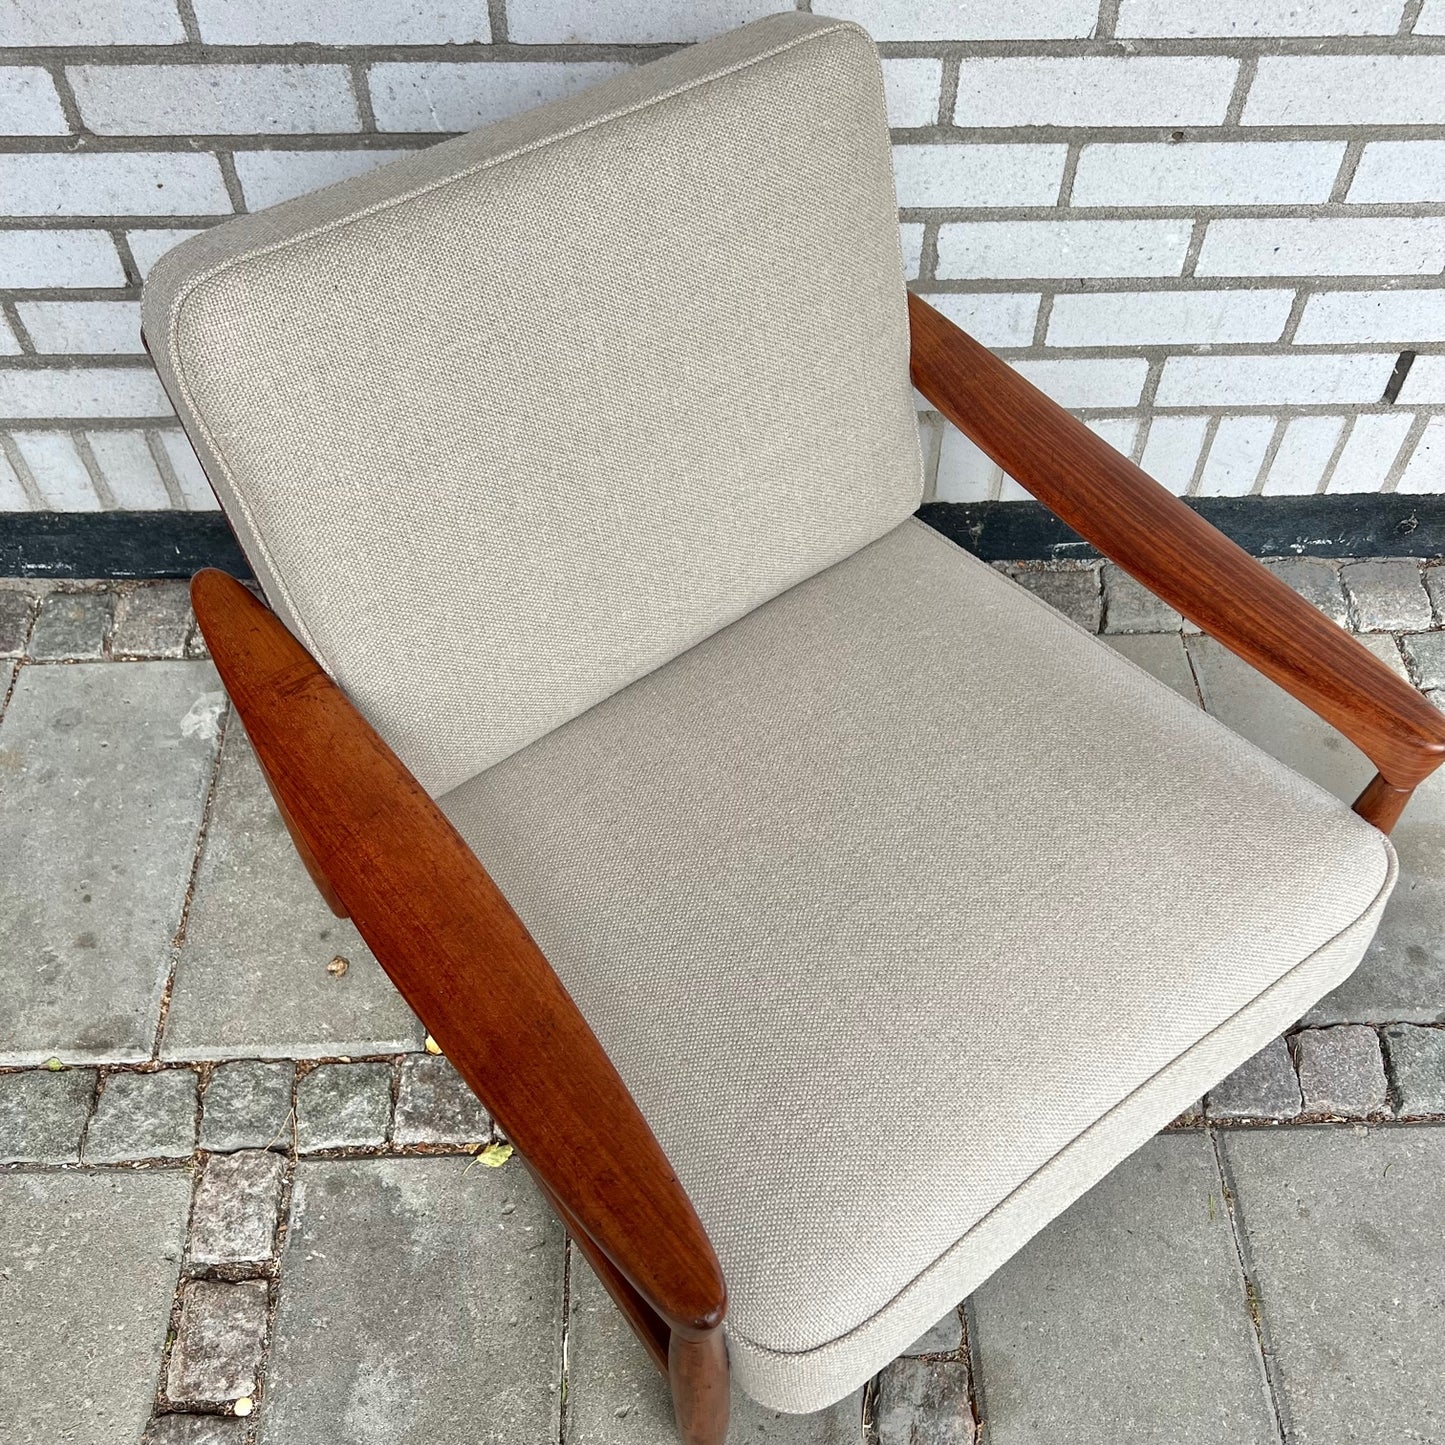 Easy chair “kolding” by Erik Wørtz